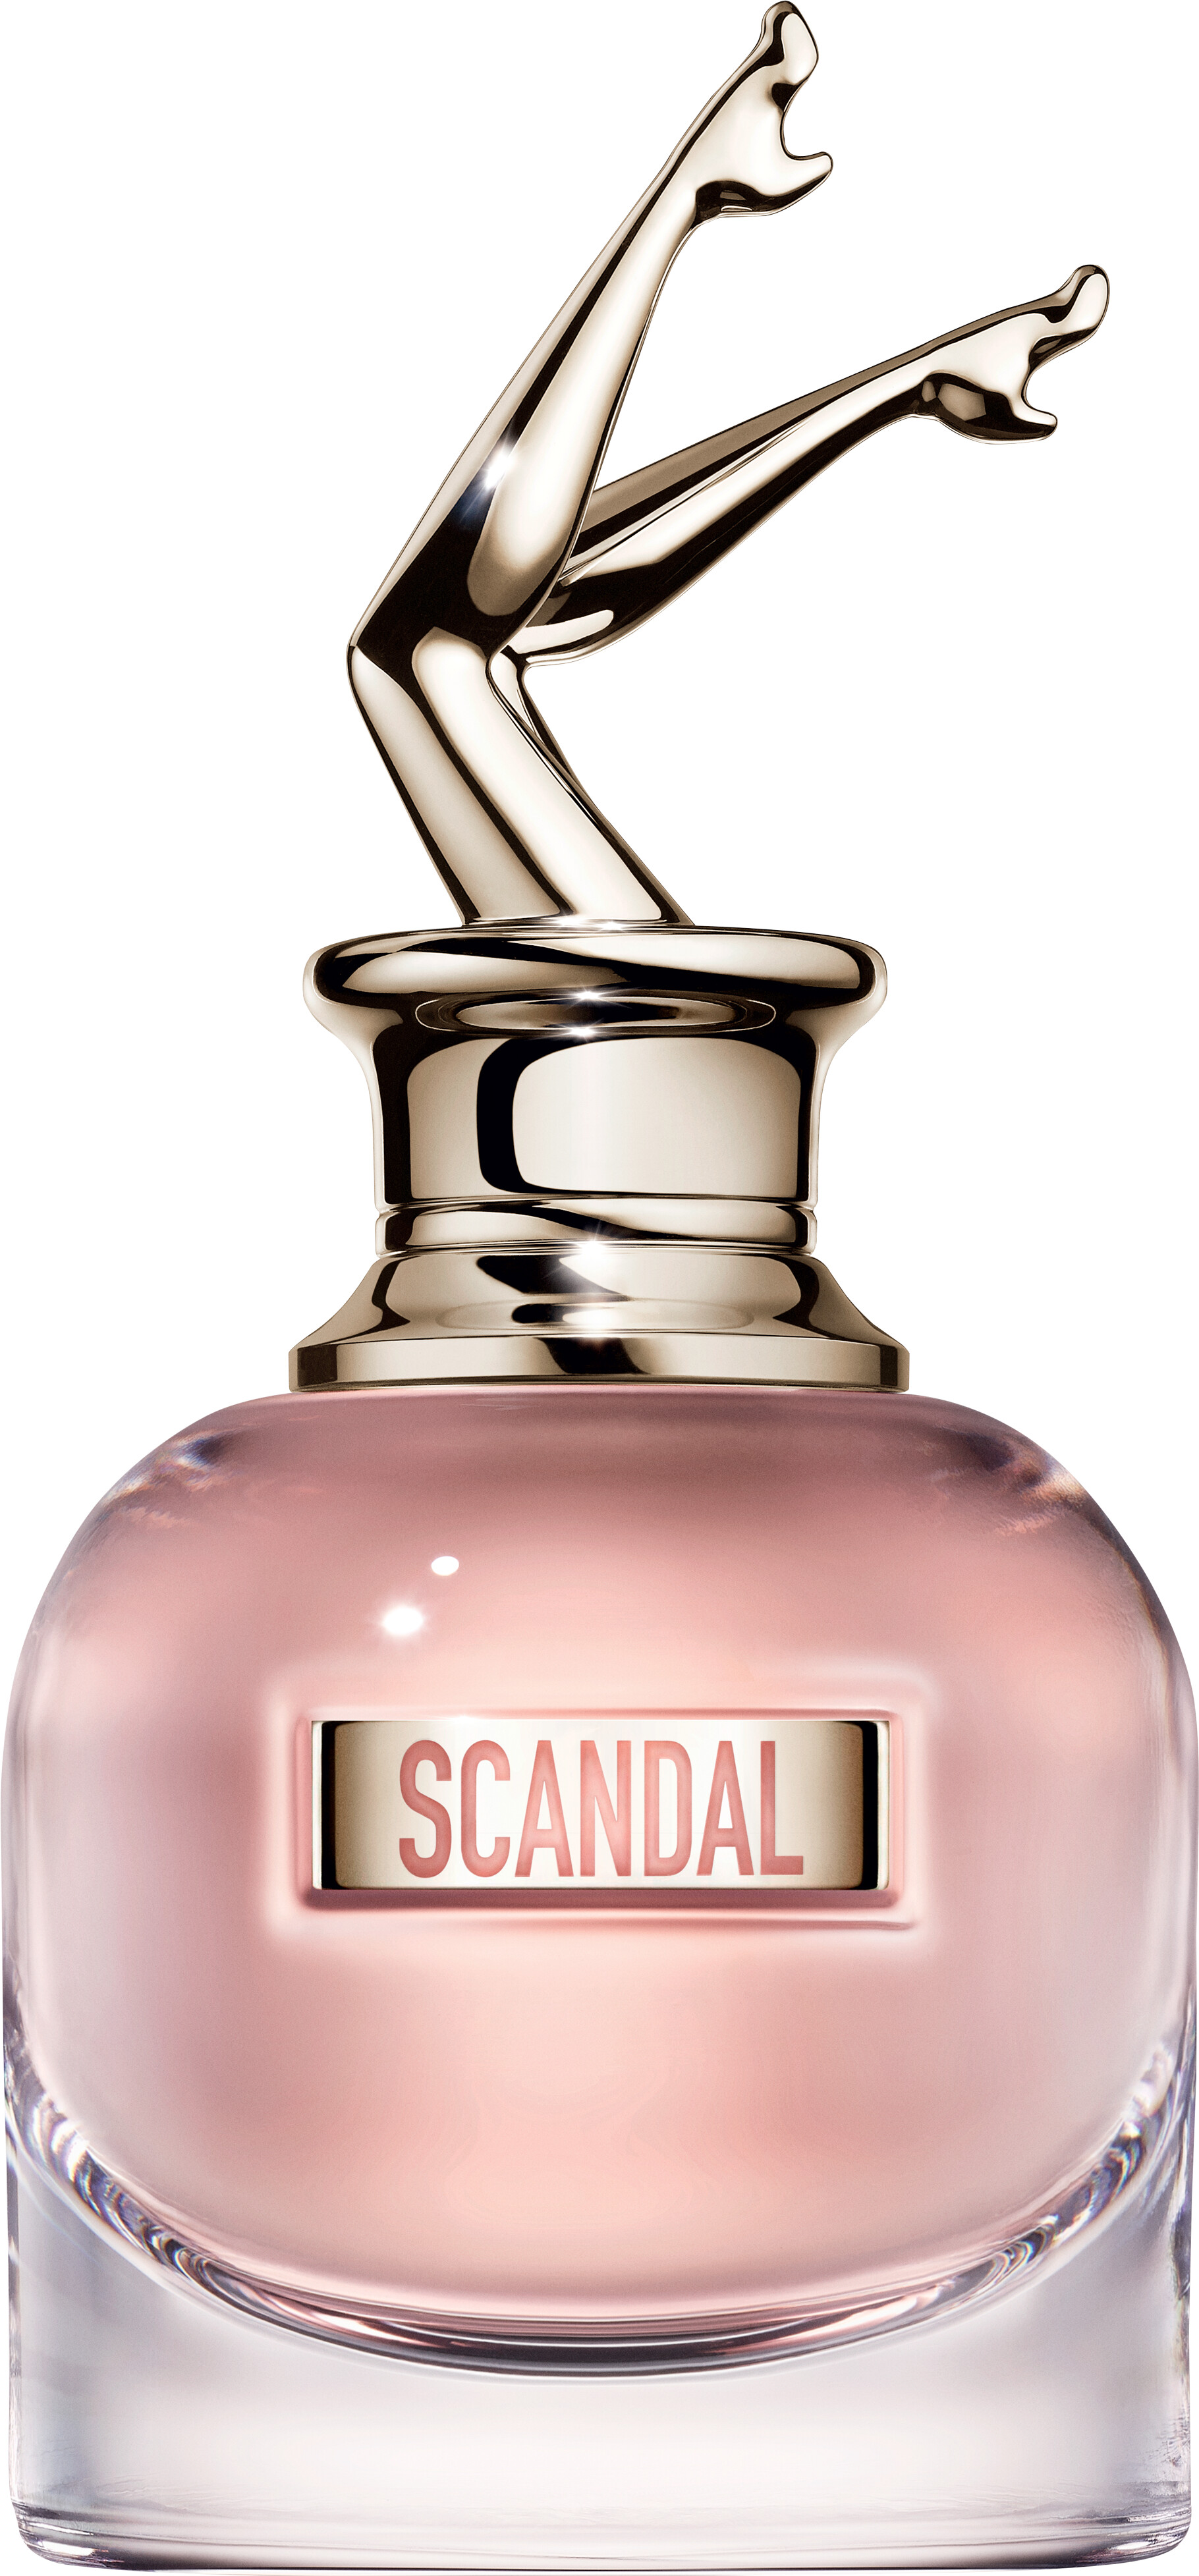 Jean Paul Gaultier Scandal Eau de Parfum Spray 50ml